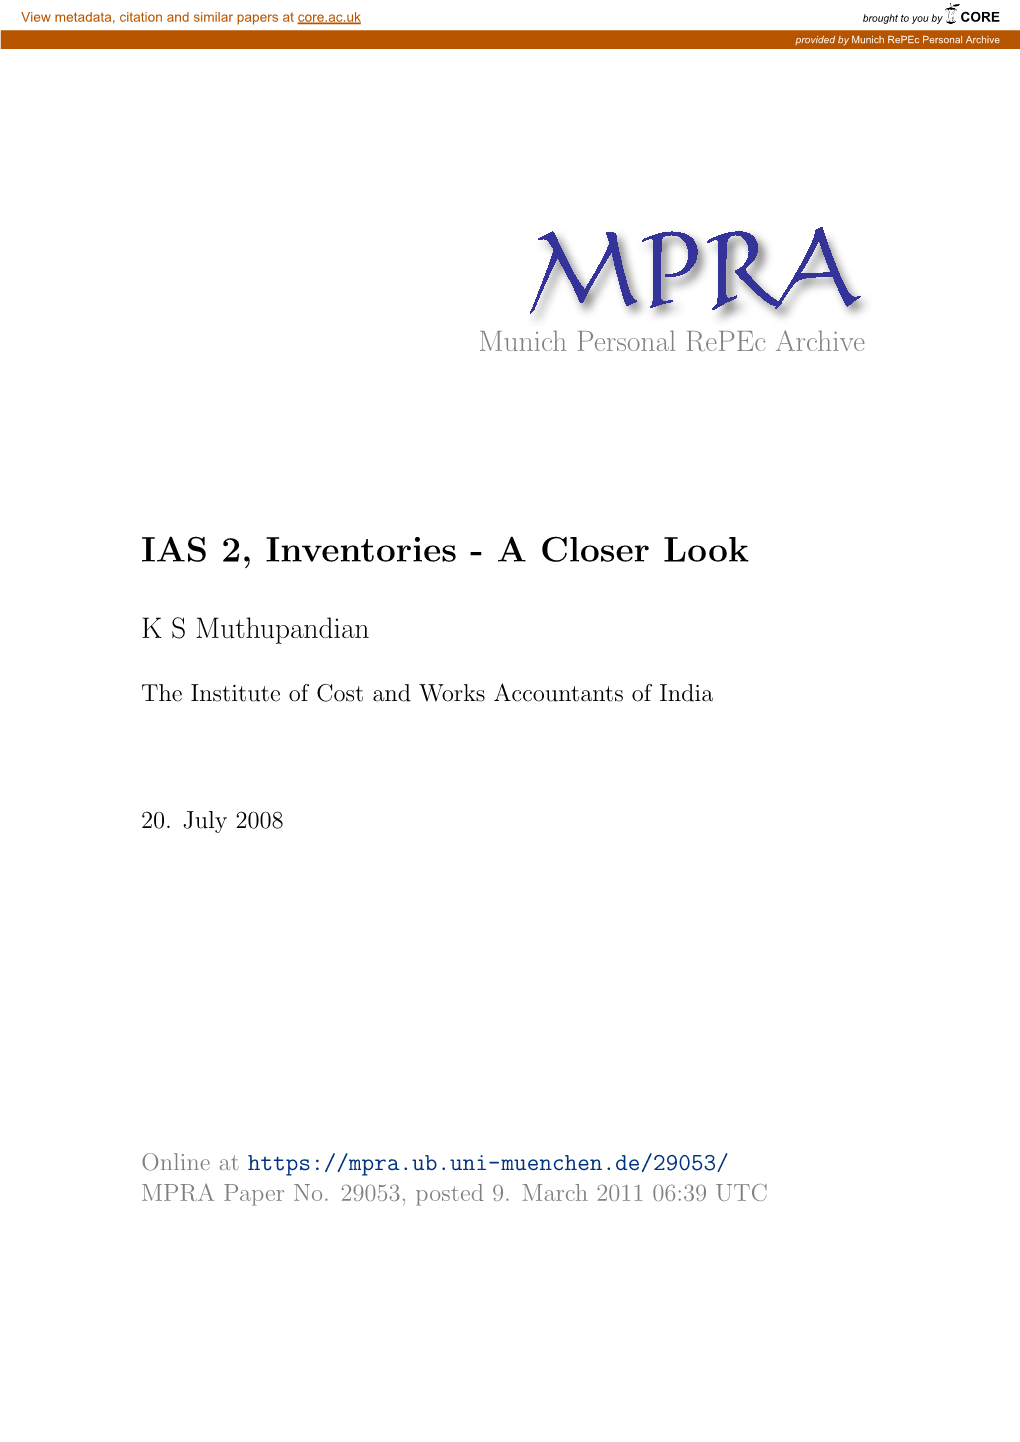 IAS 2, Inventories - a Closer Look